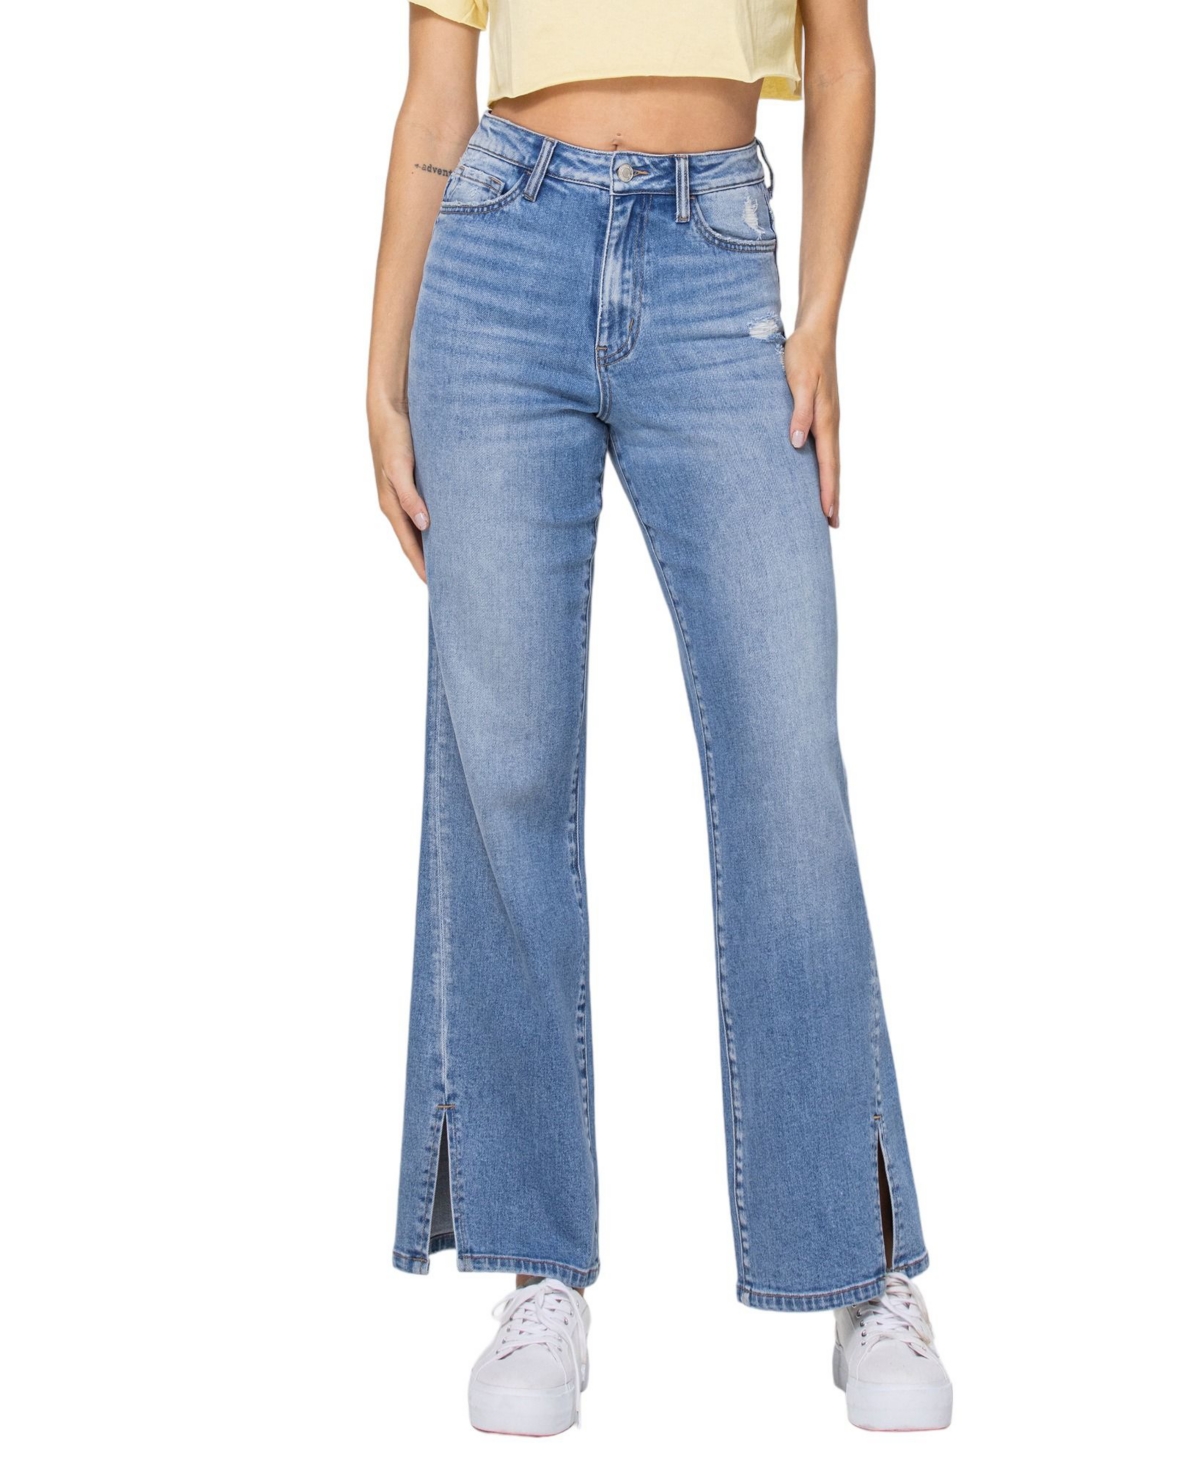 Women's Super High Rise 90's Vintage-like Flare Jeans - Centered blue